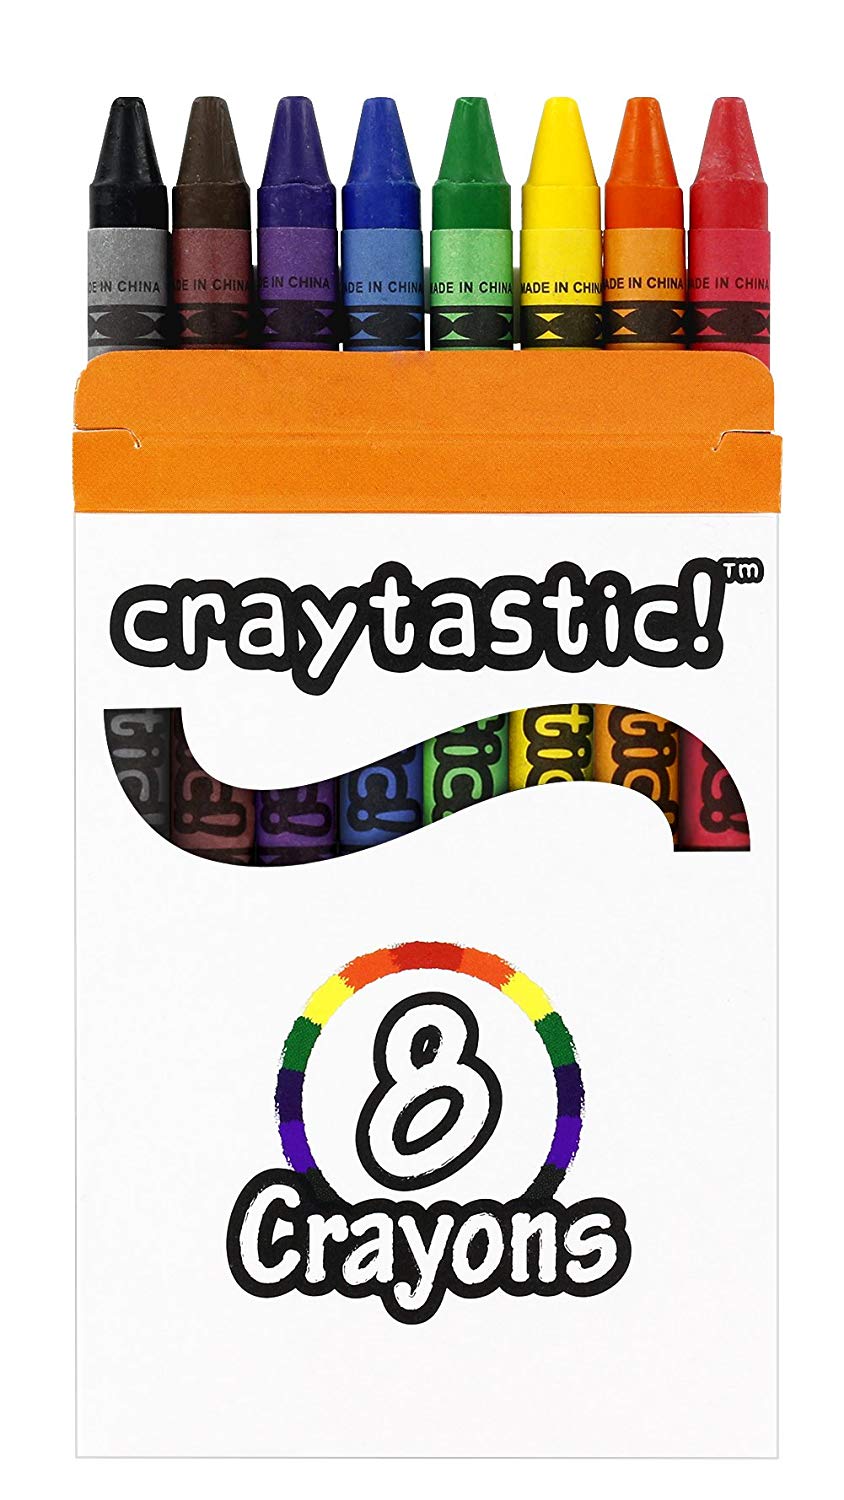 Craytastic bulk crayons.